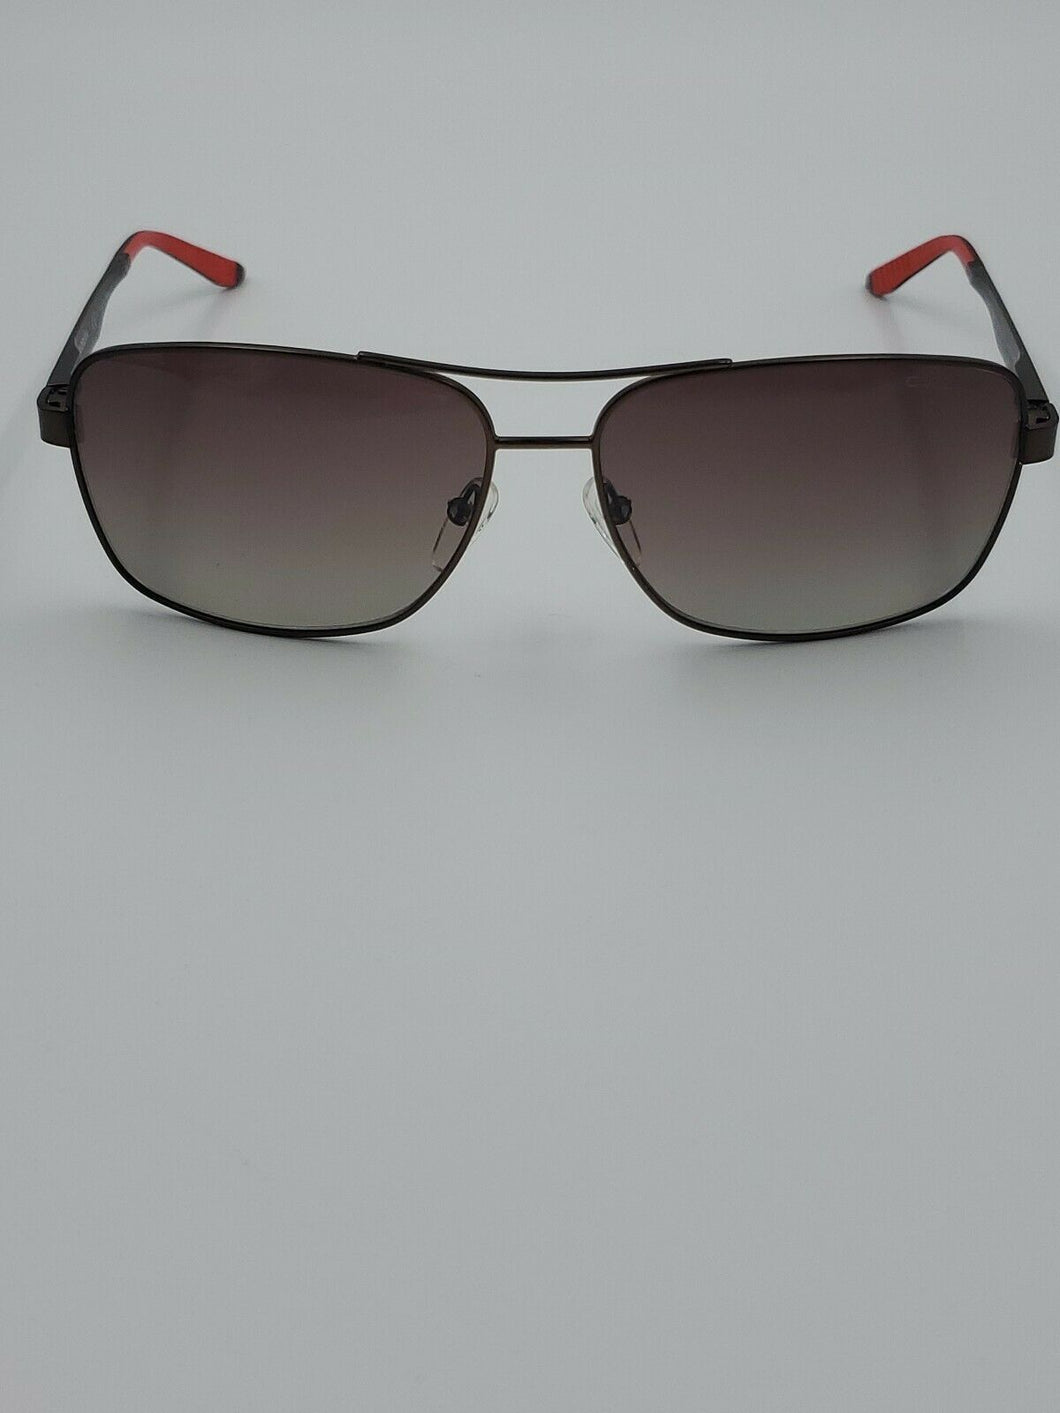 New Carrera Mens Polarized Sunglasses 8014S NLX Brown 61mm + Case 8014/S Aviator